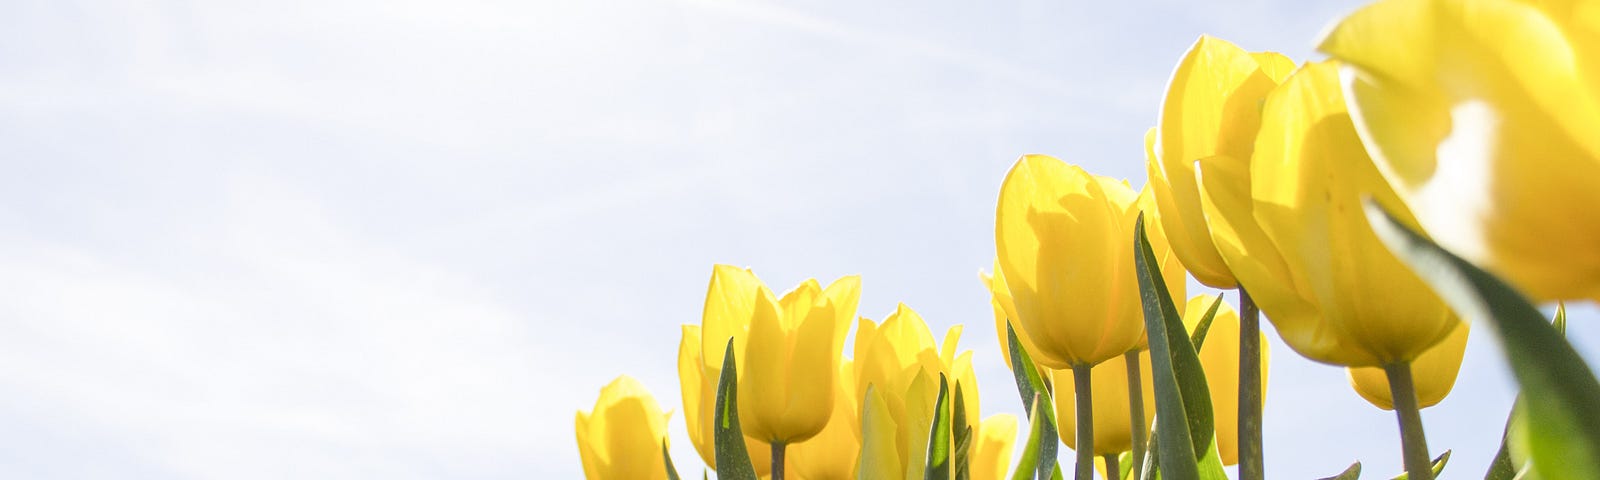 Photo of some yellow tulips